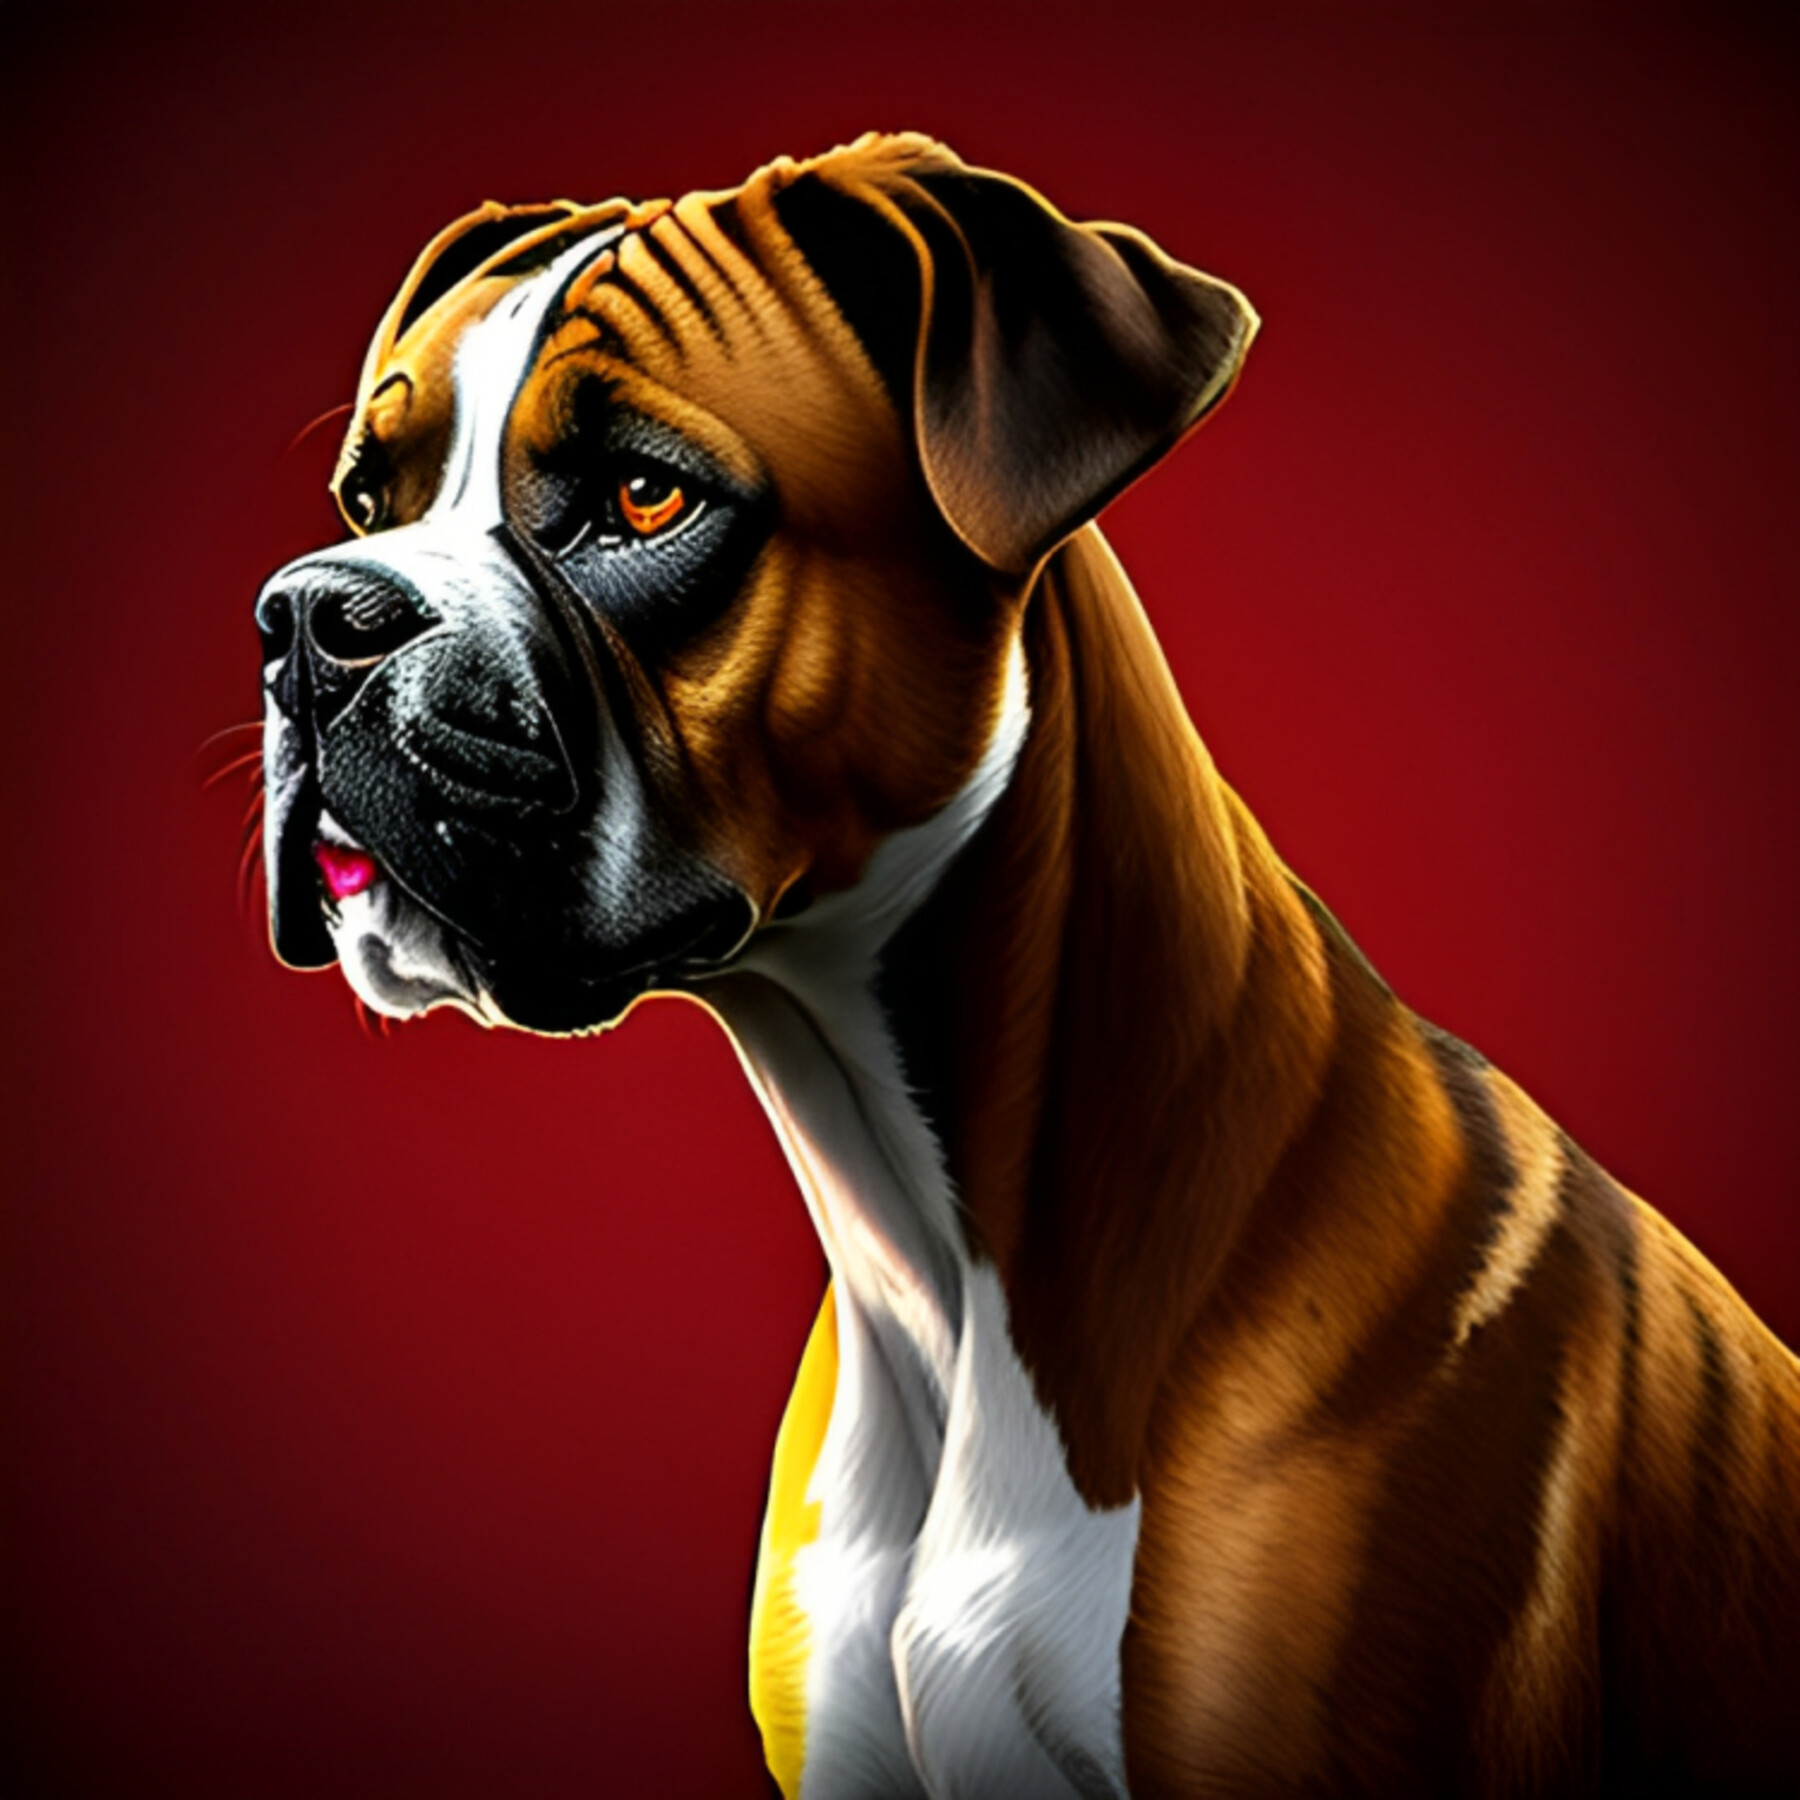 ArtStation - Portrait of a Boxer dog on red background